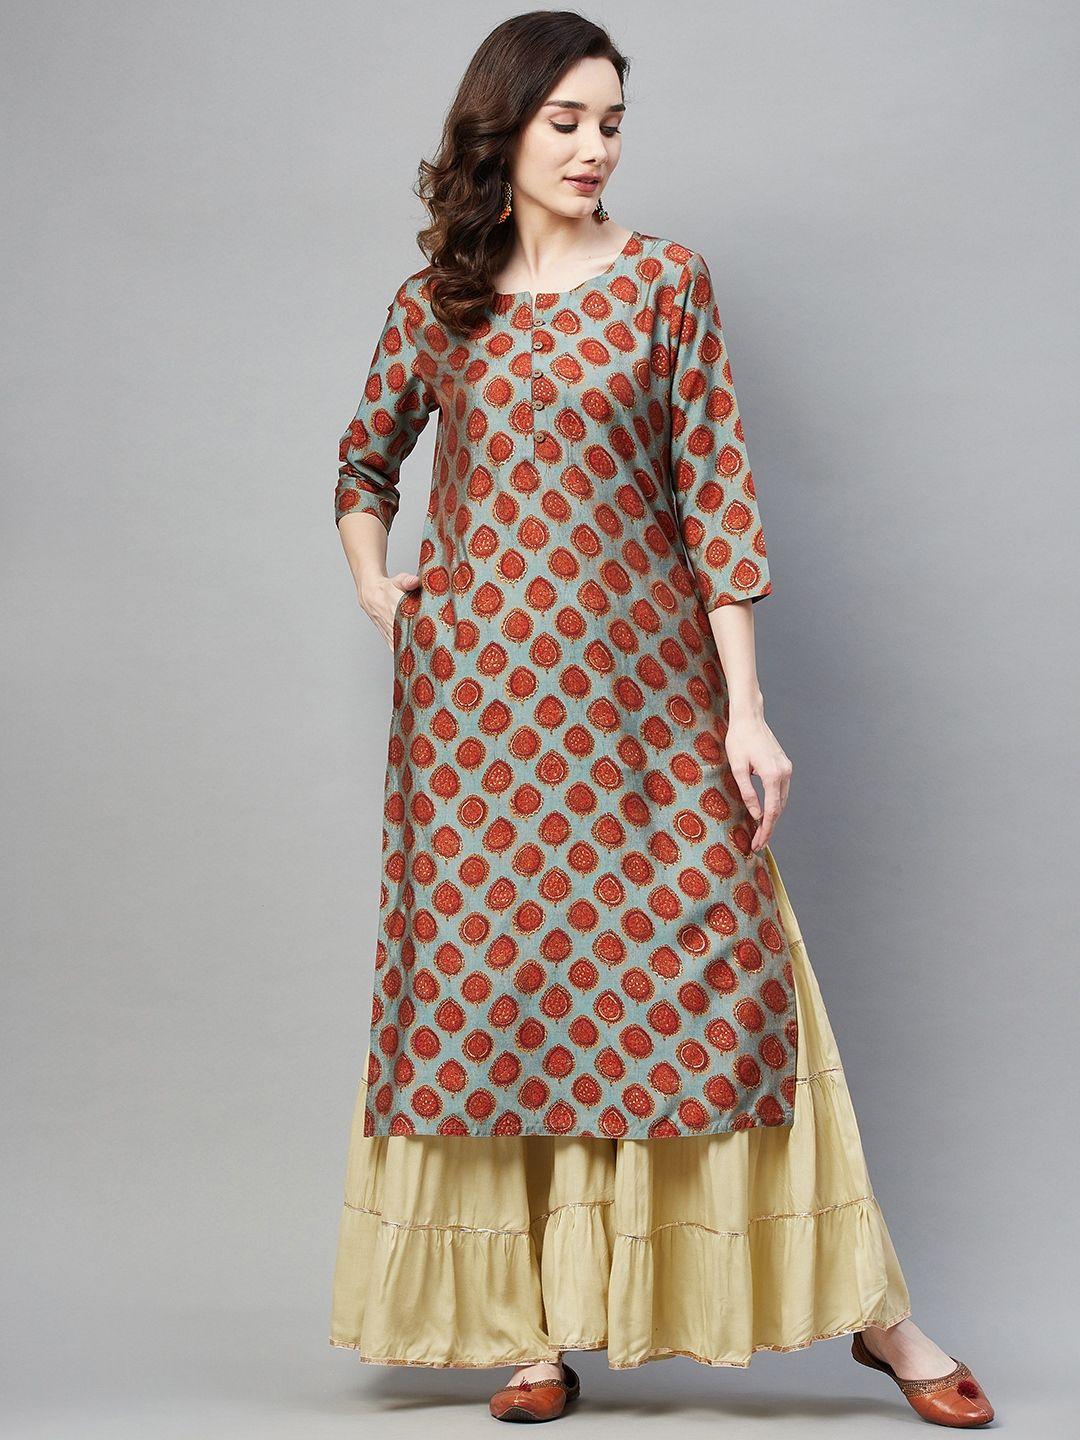 aarika women grey & maroon ethnic motifs printed kurta